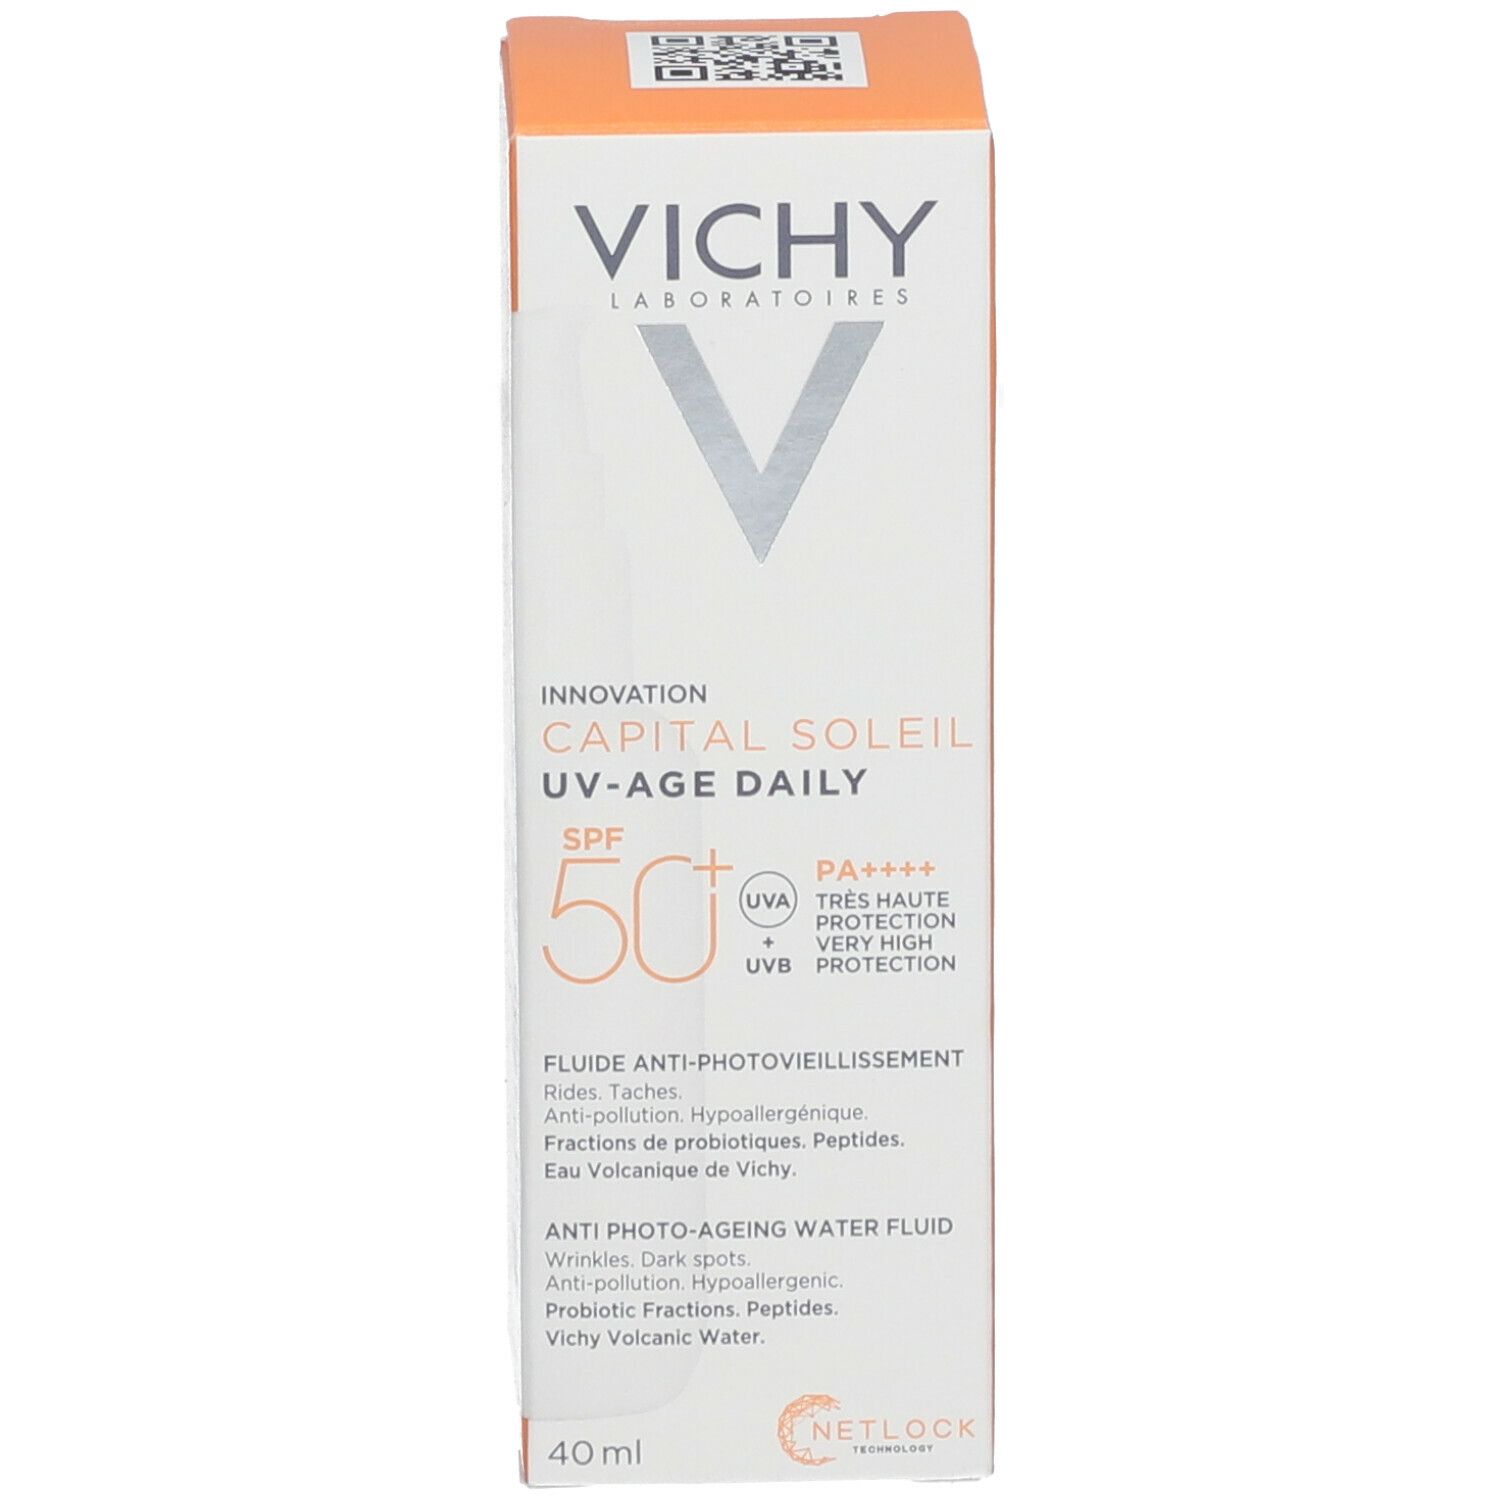 VICHY Capital Soleil UV-AGE DAILY SPF50+ Flacon 40ml